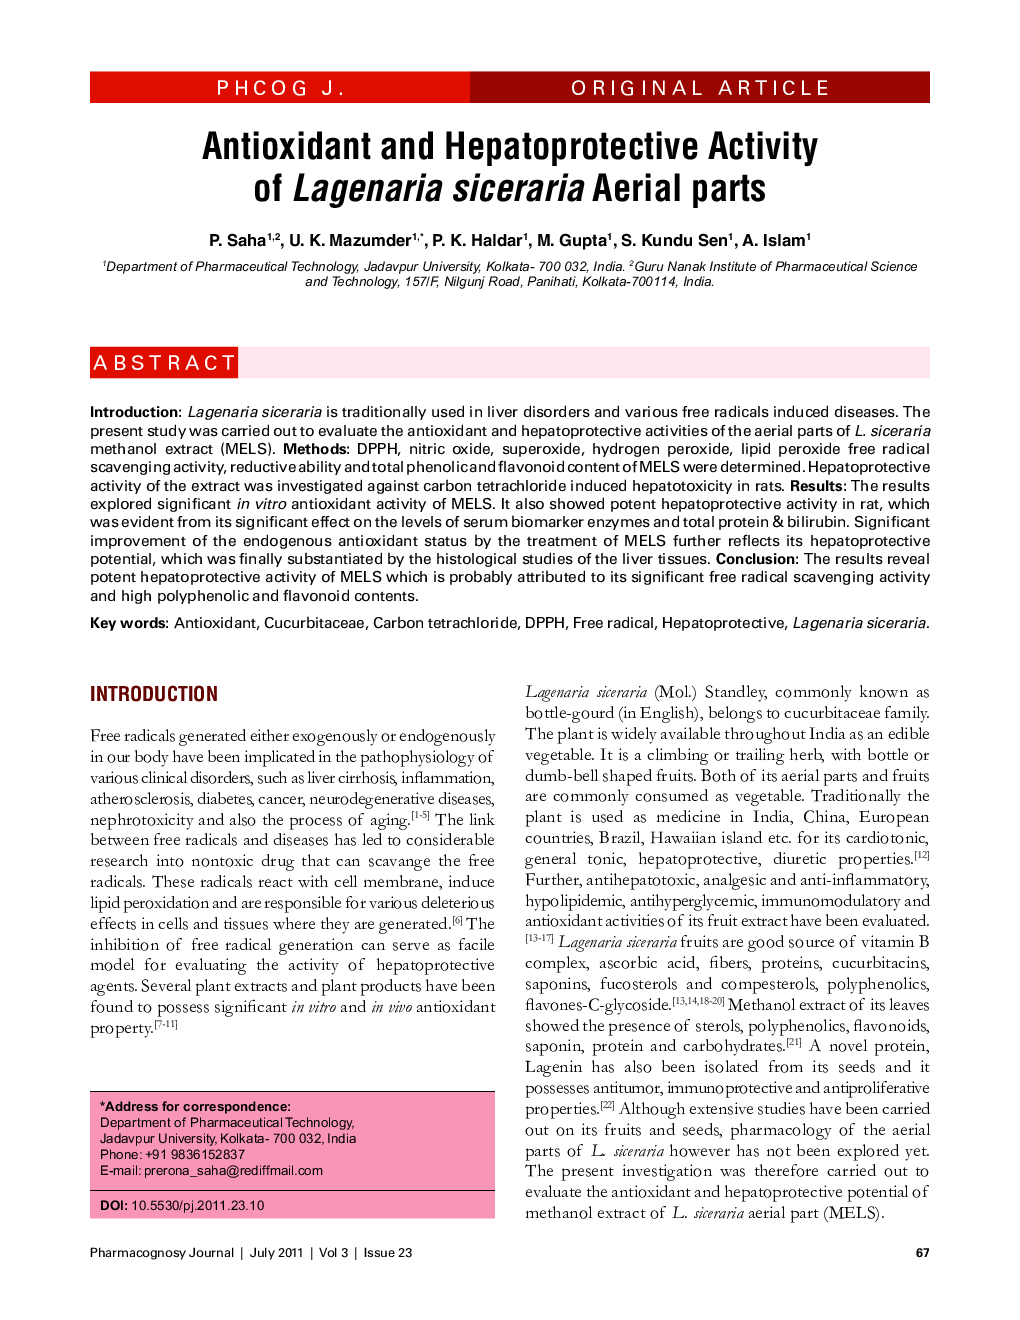 Antioxidant and Hepatoprotective Activity of Lagenaria siceraria Aerial parts